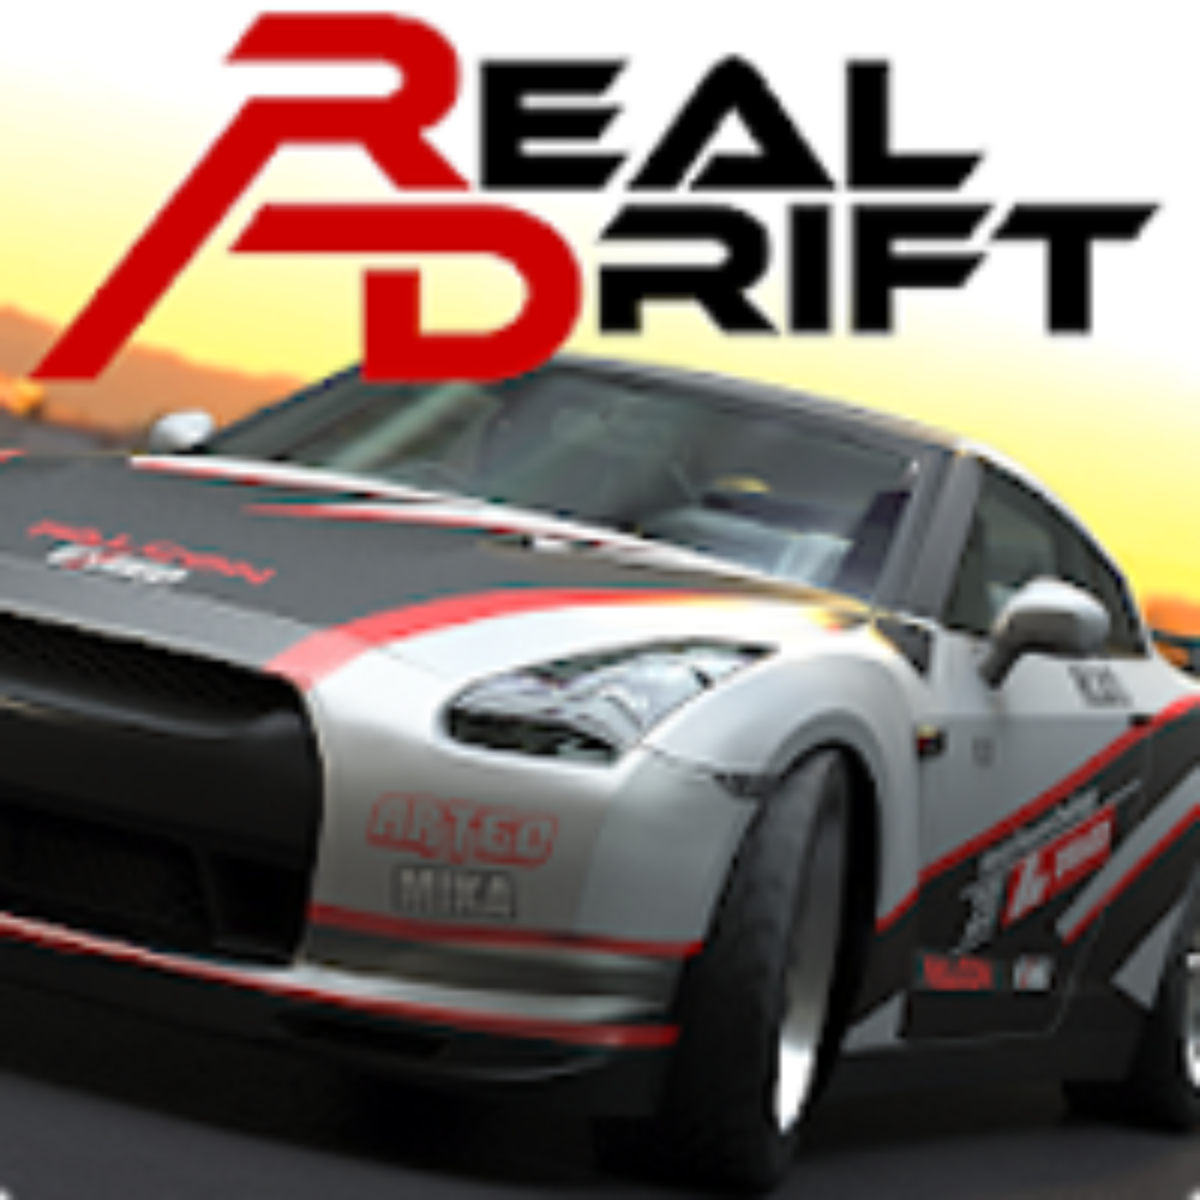 Drift Max City Drift Racing v5.4 Apk Mod (Dinheiro infinito) - HzNxTips